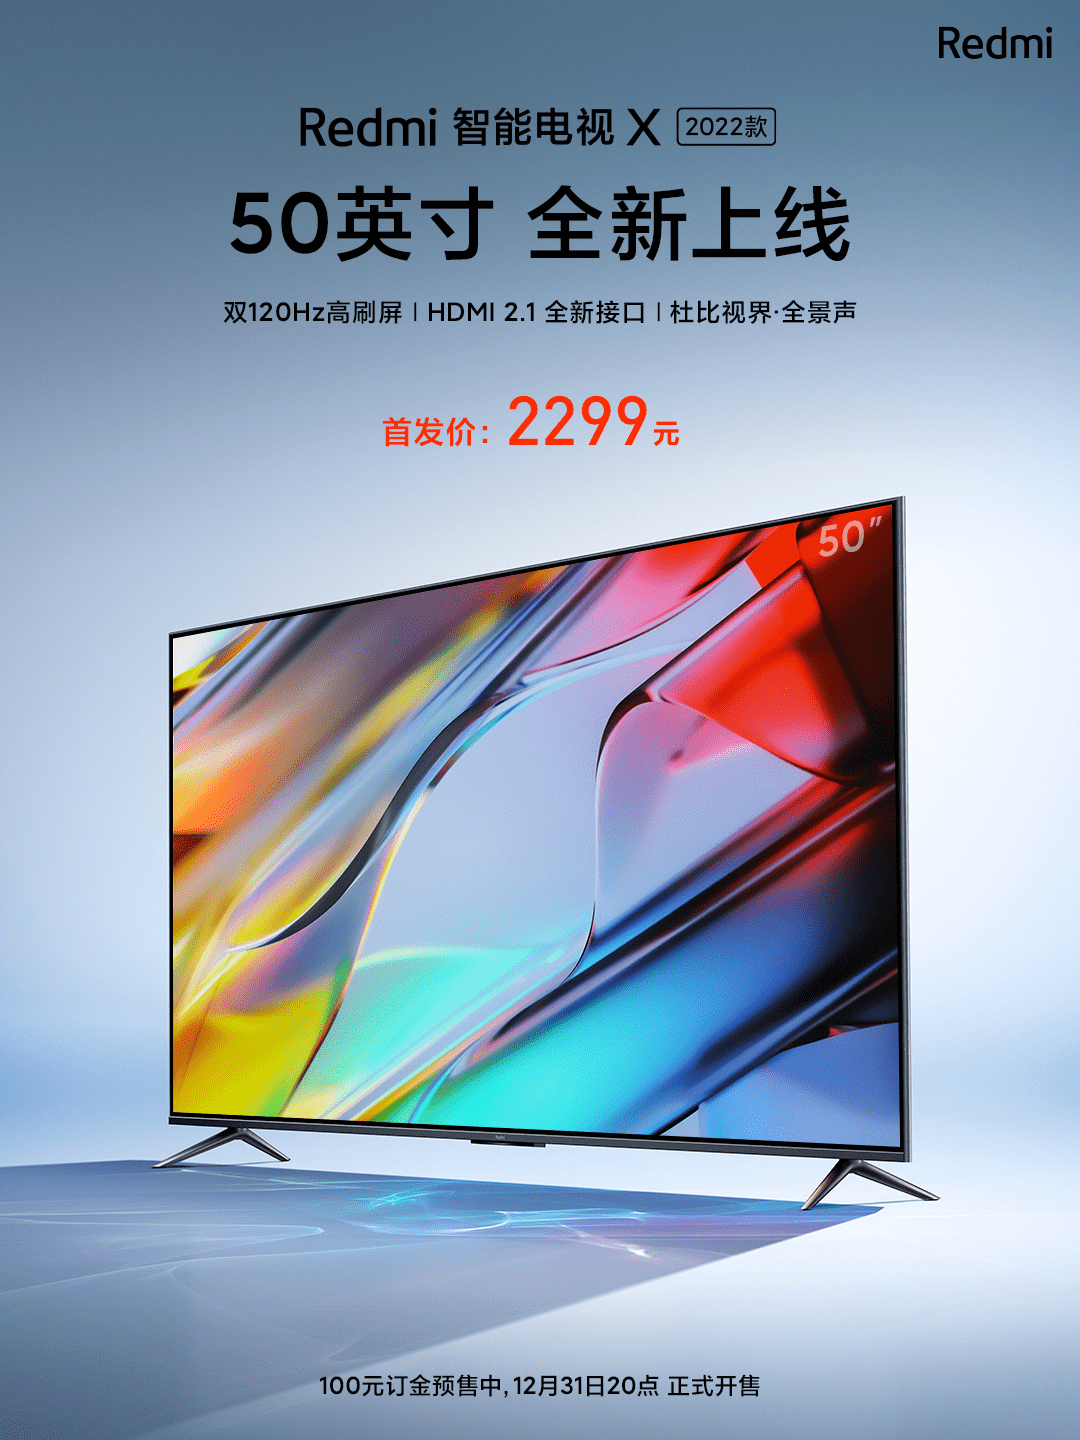 Cortex|首发价 2299 元，Redmi 智能电视 X 2022 款 50 英寸全新上线